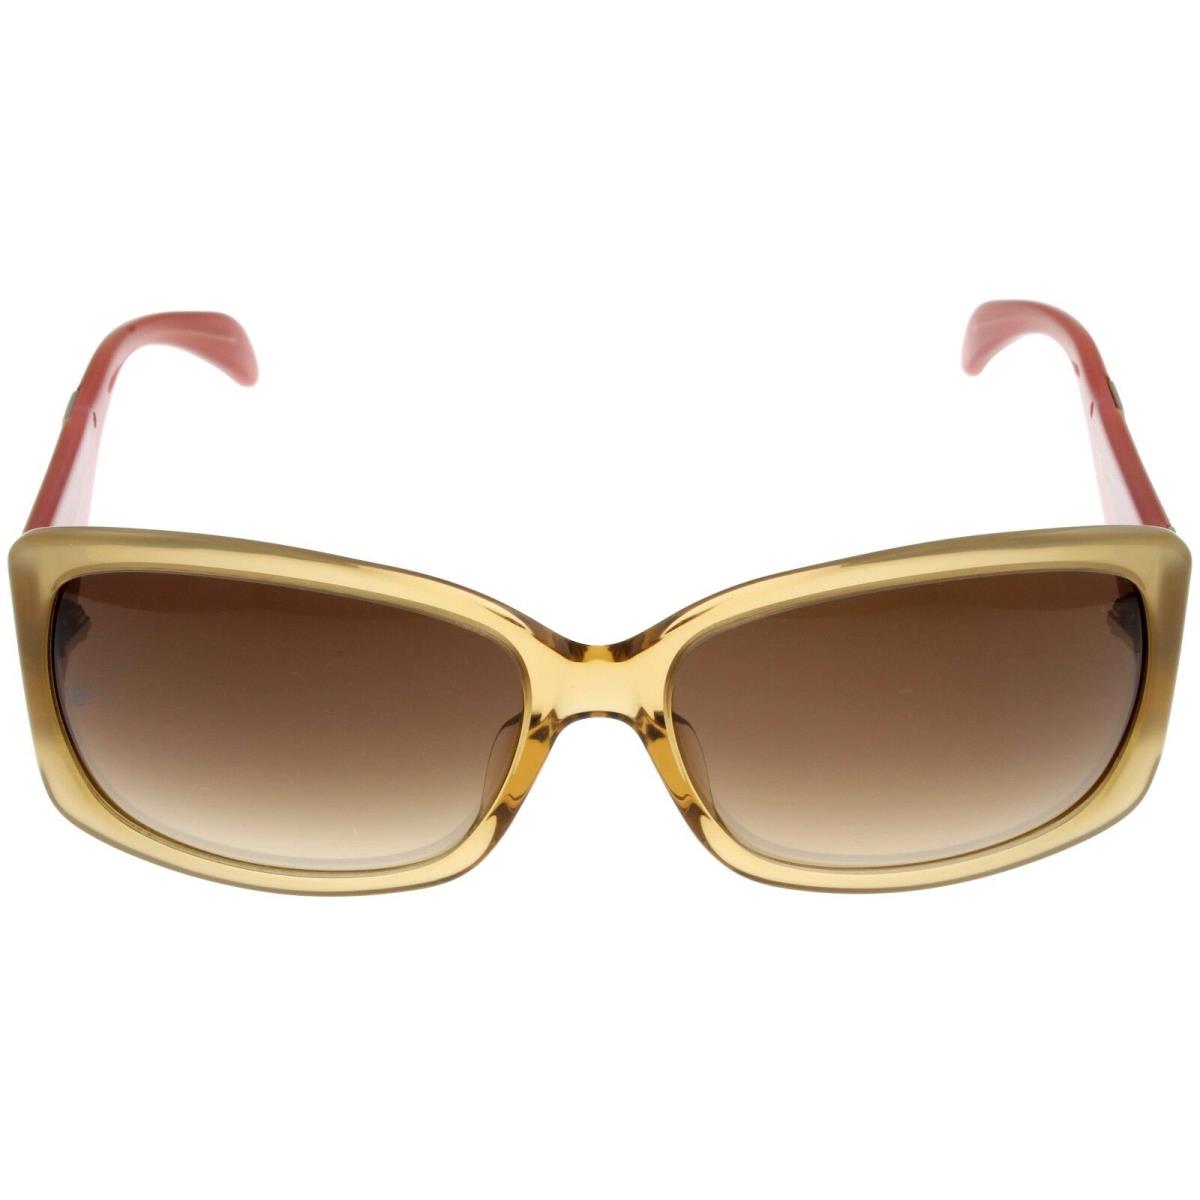 Giorgio Armani Sunglasses Women GA692S 5A1 Brown Gold Pink Rectangular